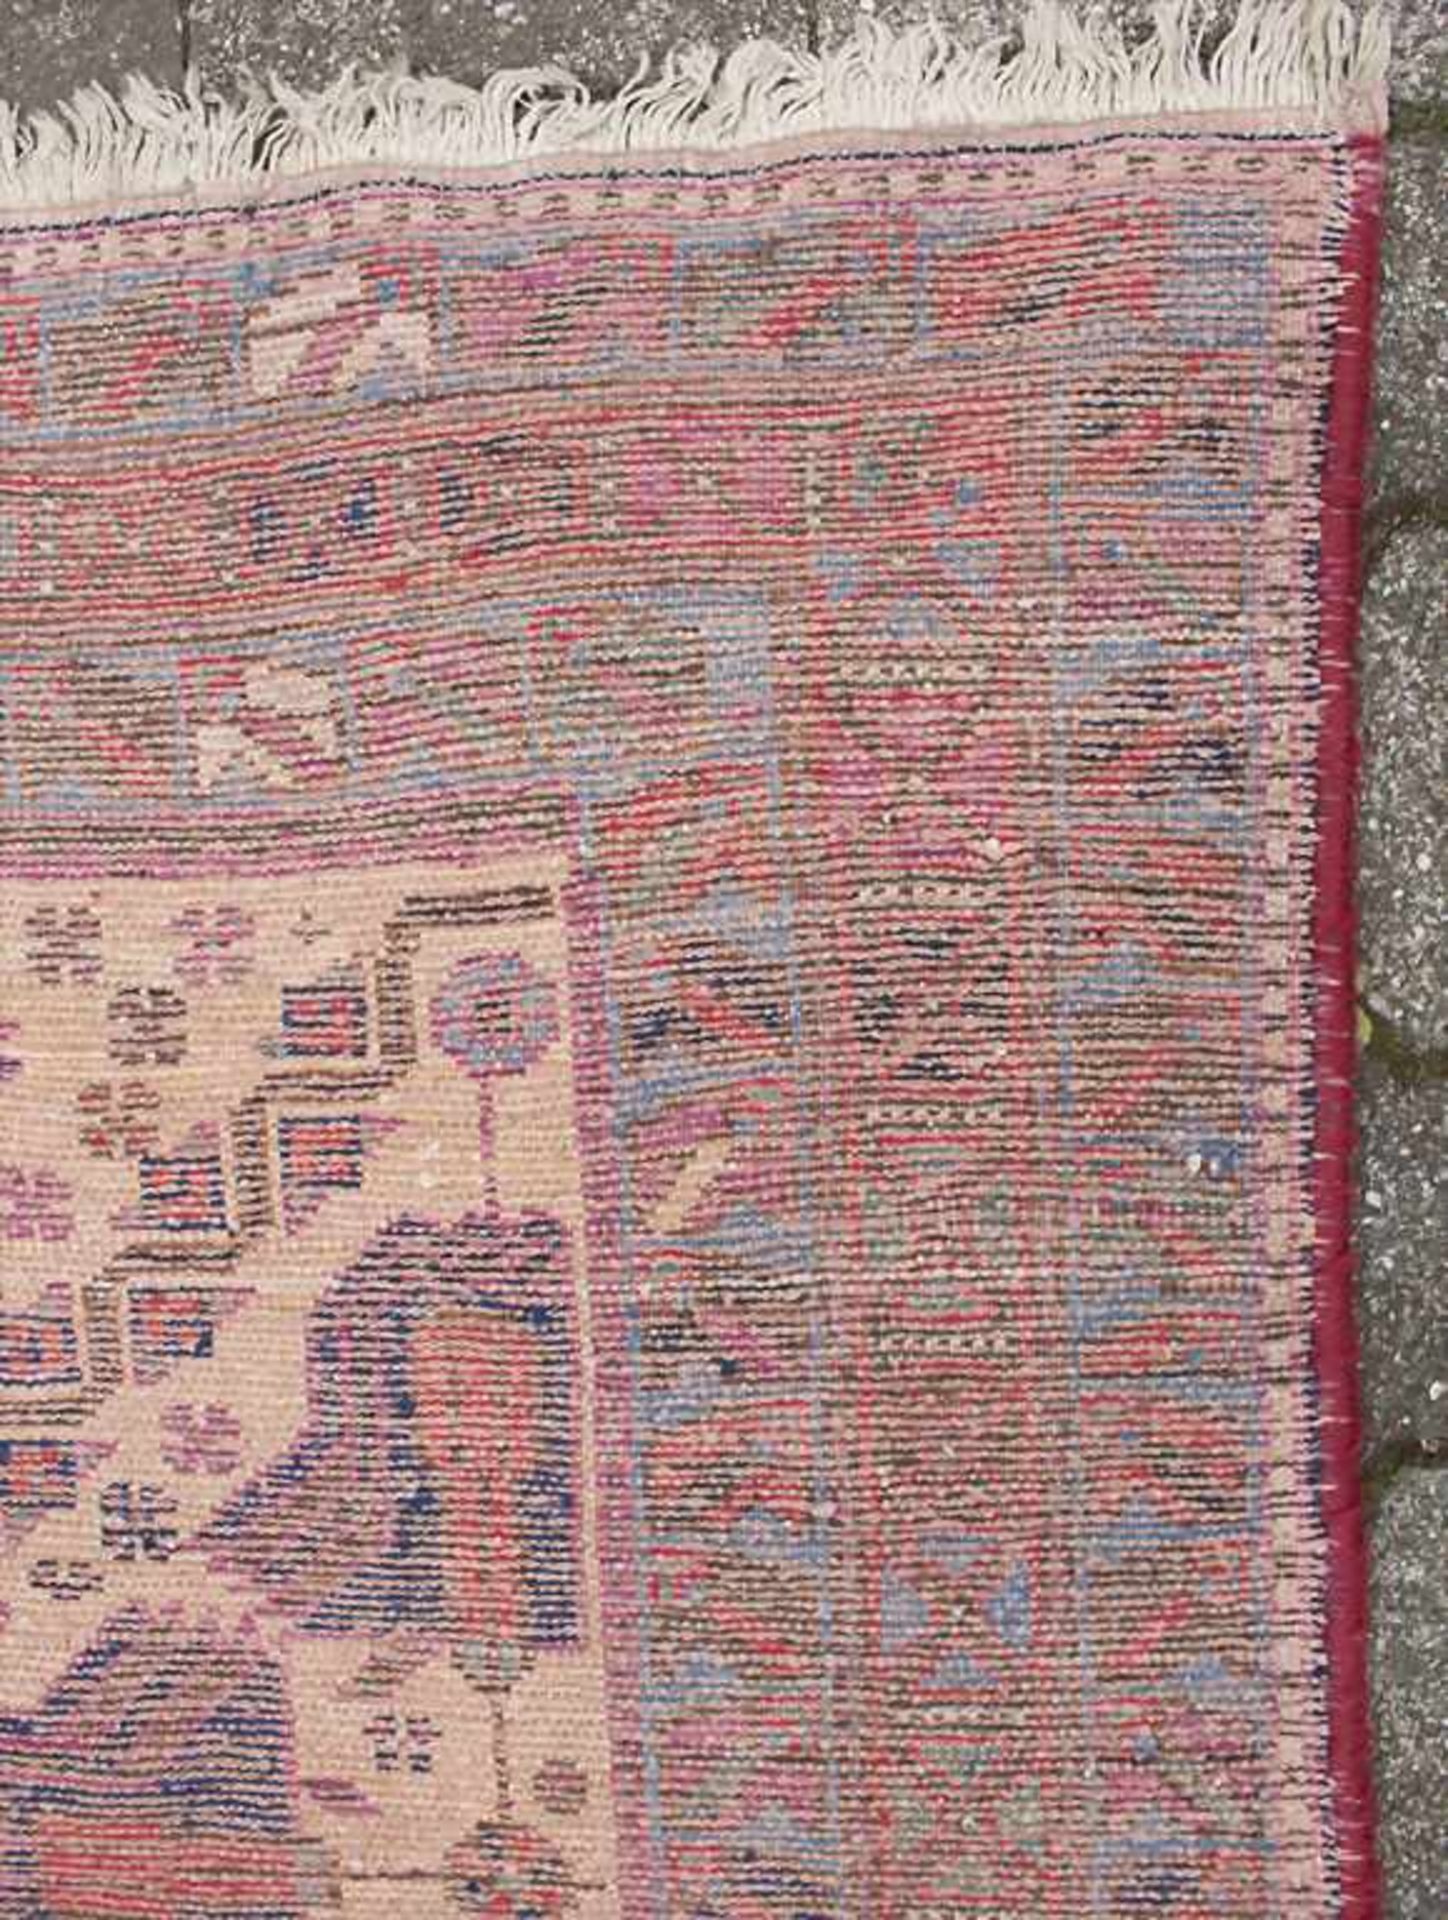 Teppich / A carpetMaterial: Wolle, Maße: 195 x 150 cm, Zustand: gut, partiell etwas betreten - Image 4 of 4